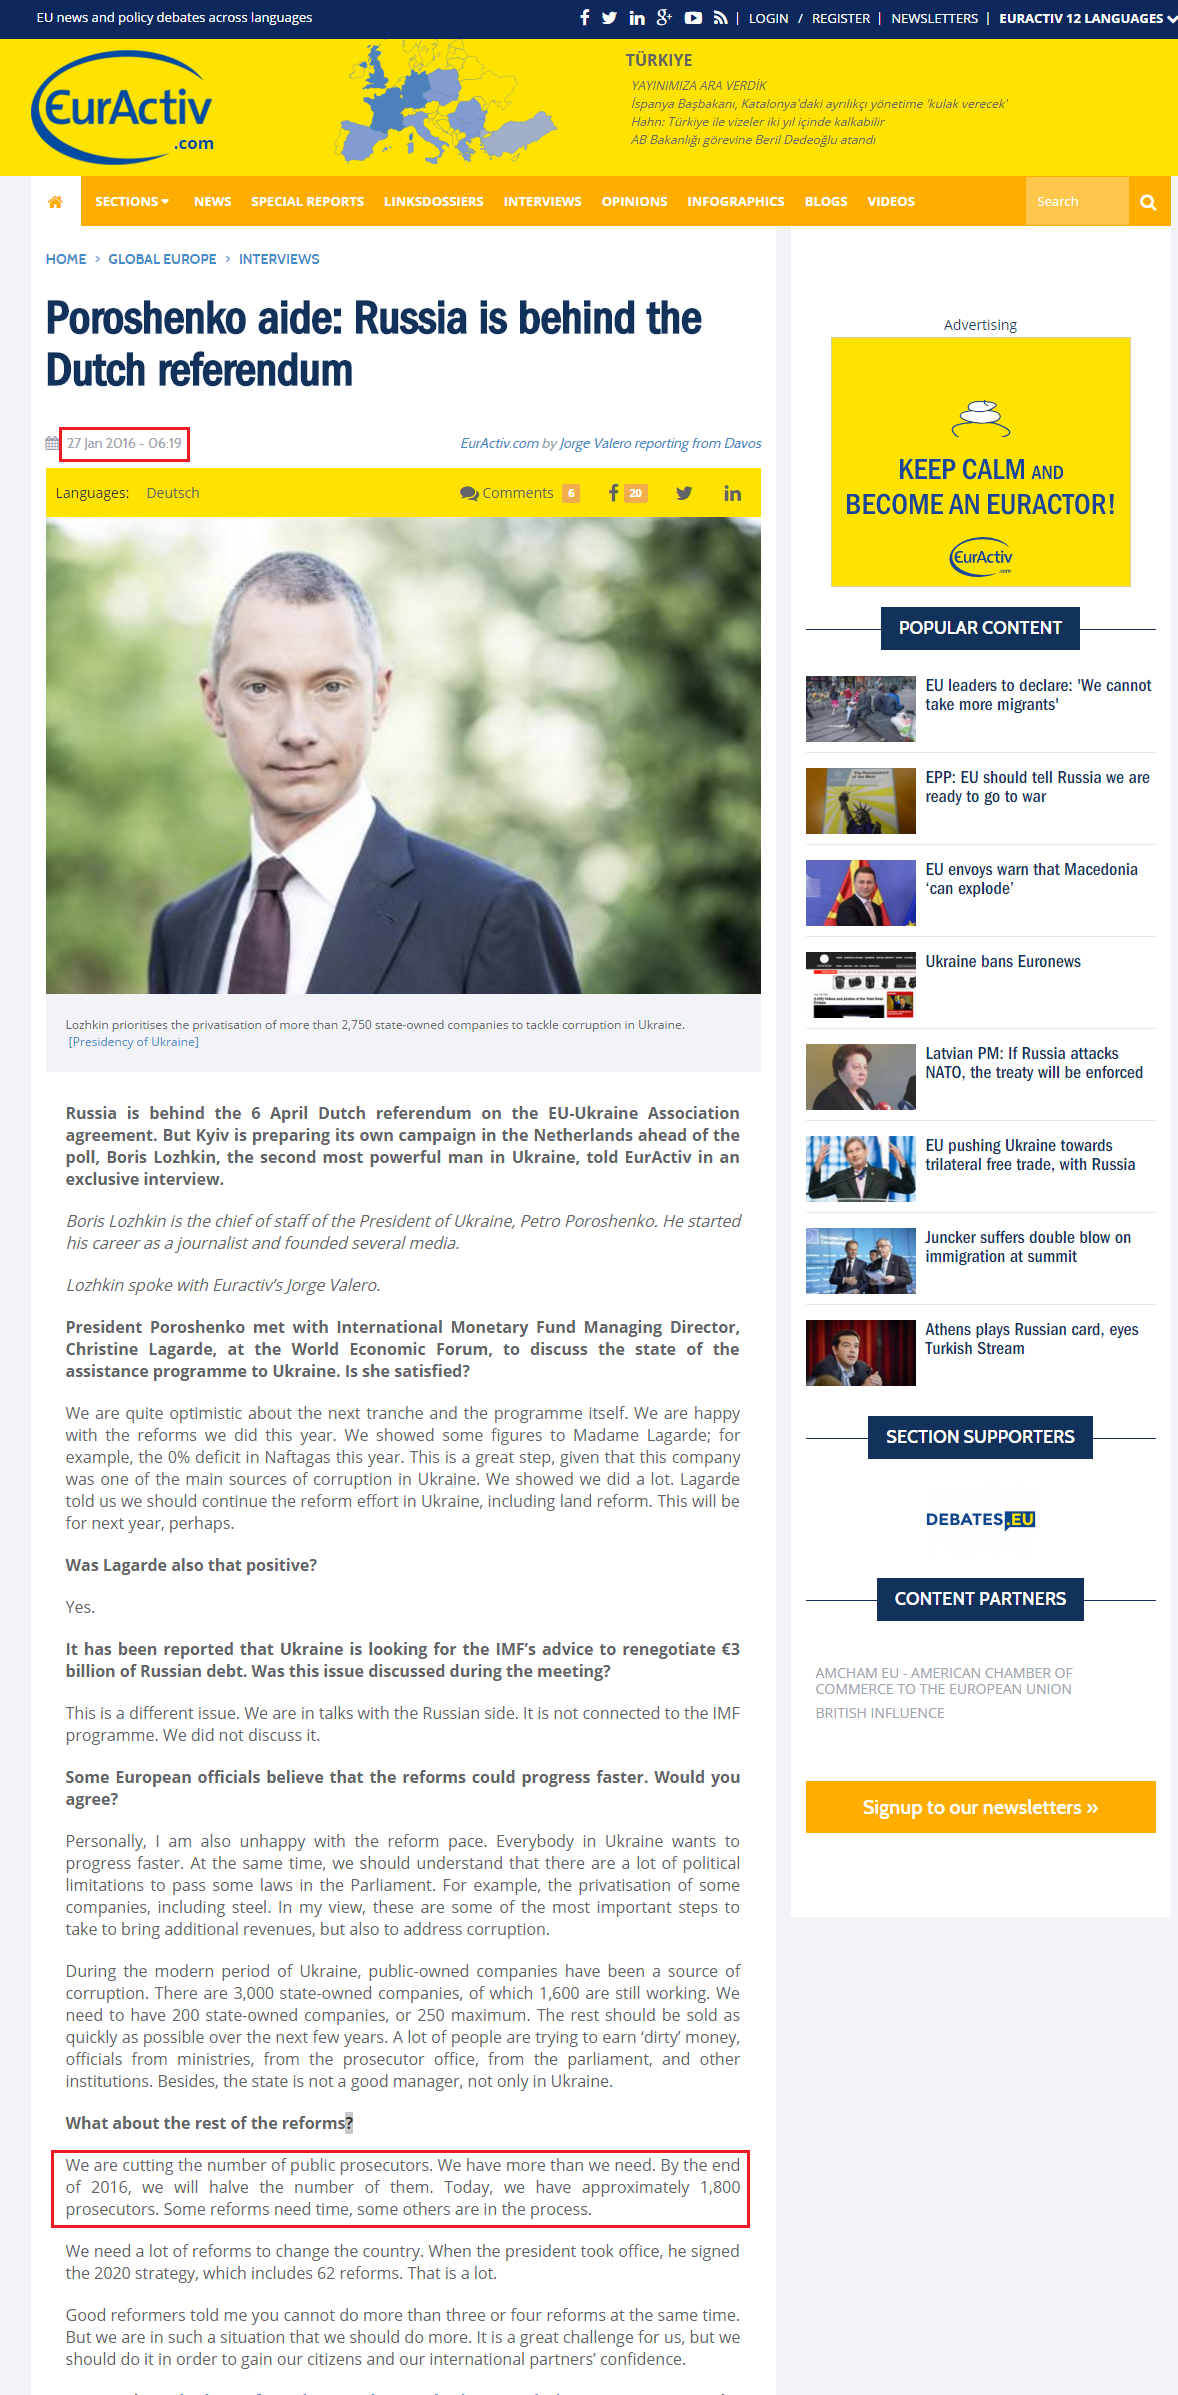 http://www.euractiv.com/sections/global-europe/poroshenko-aide-russia-behind-dutch-referendum-321331